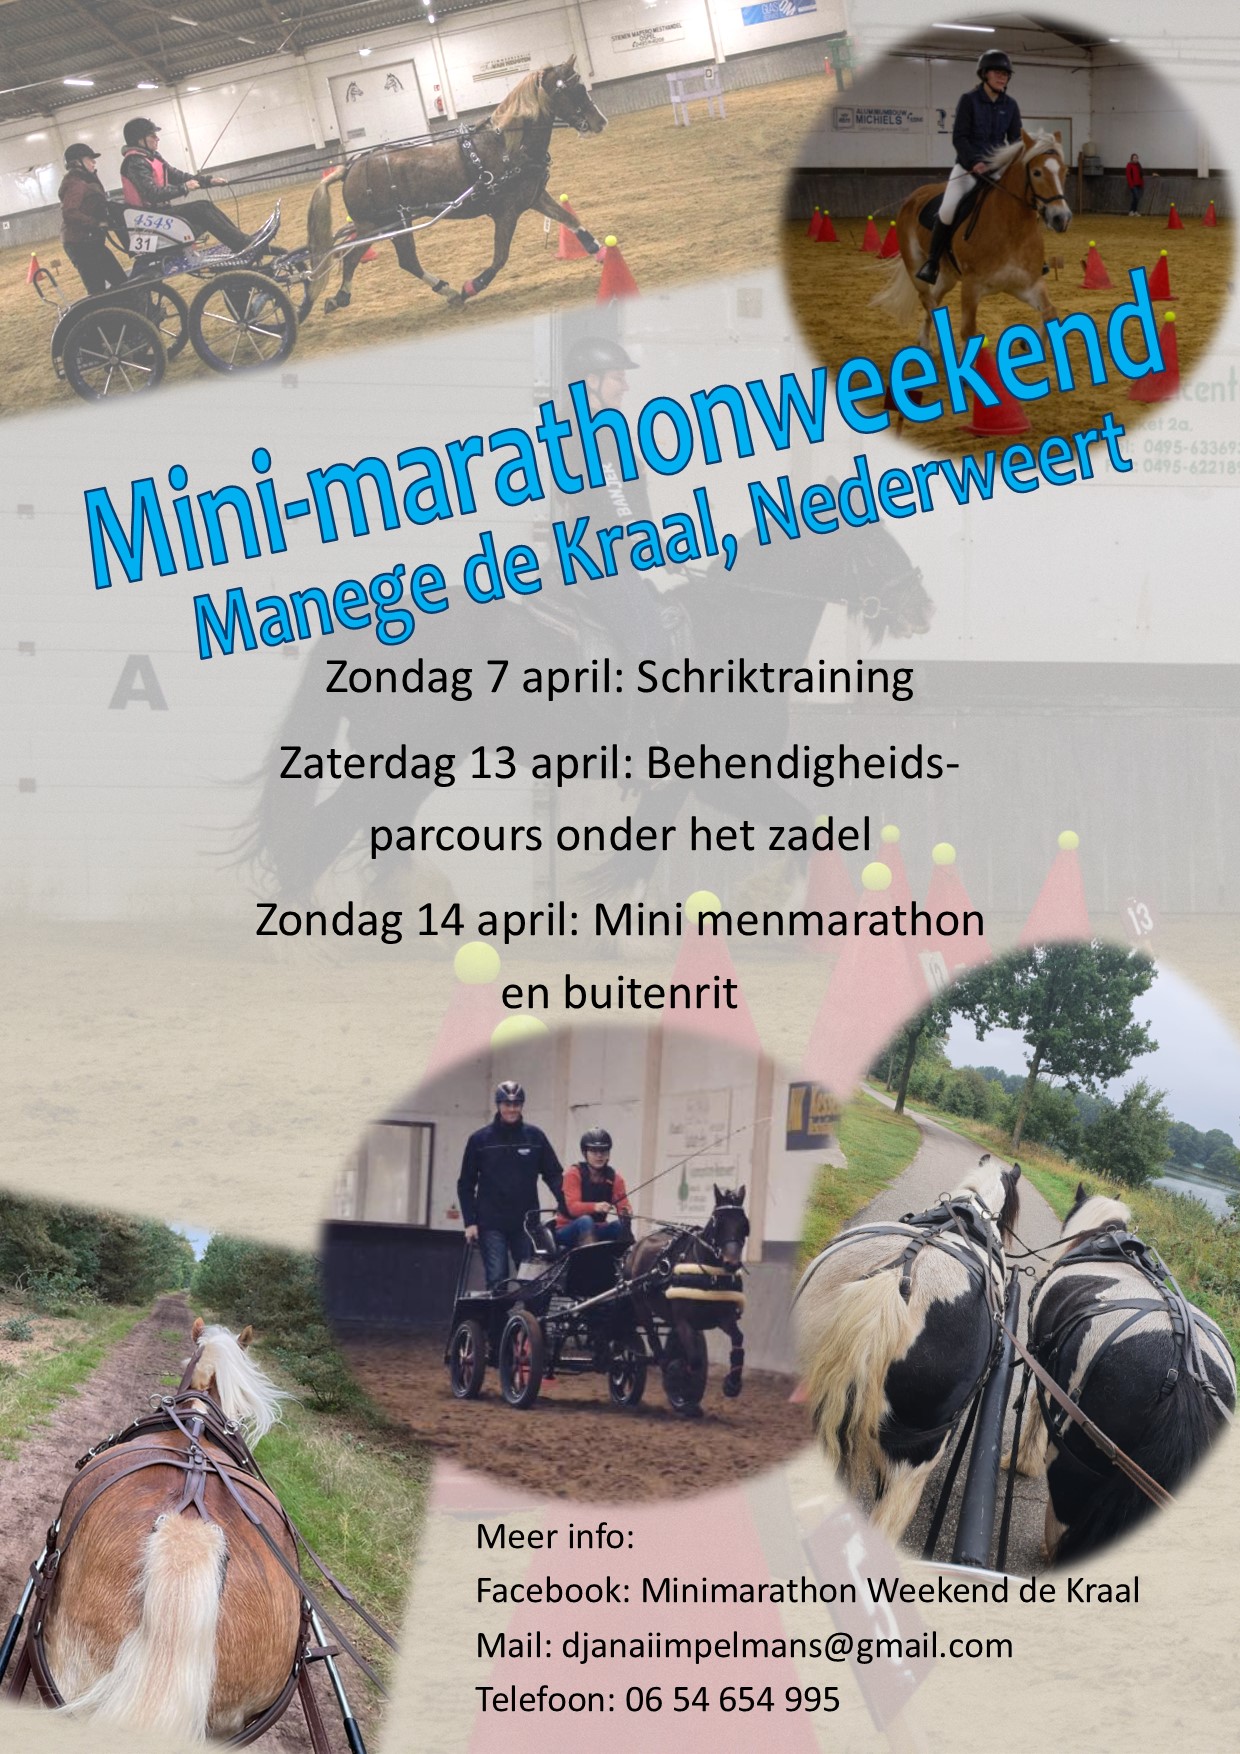 Minimarathon weekend Manege de Kraal